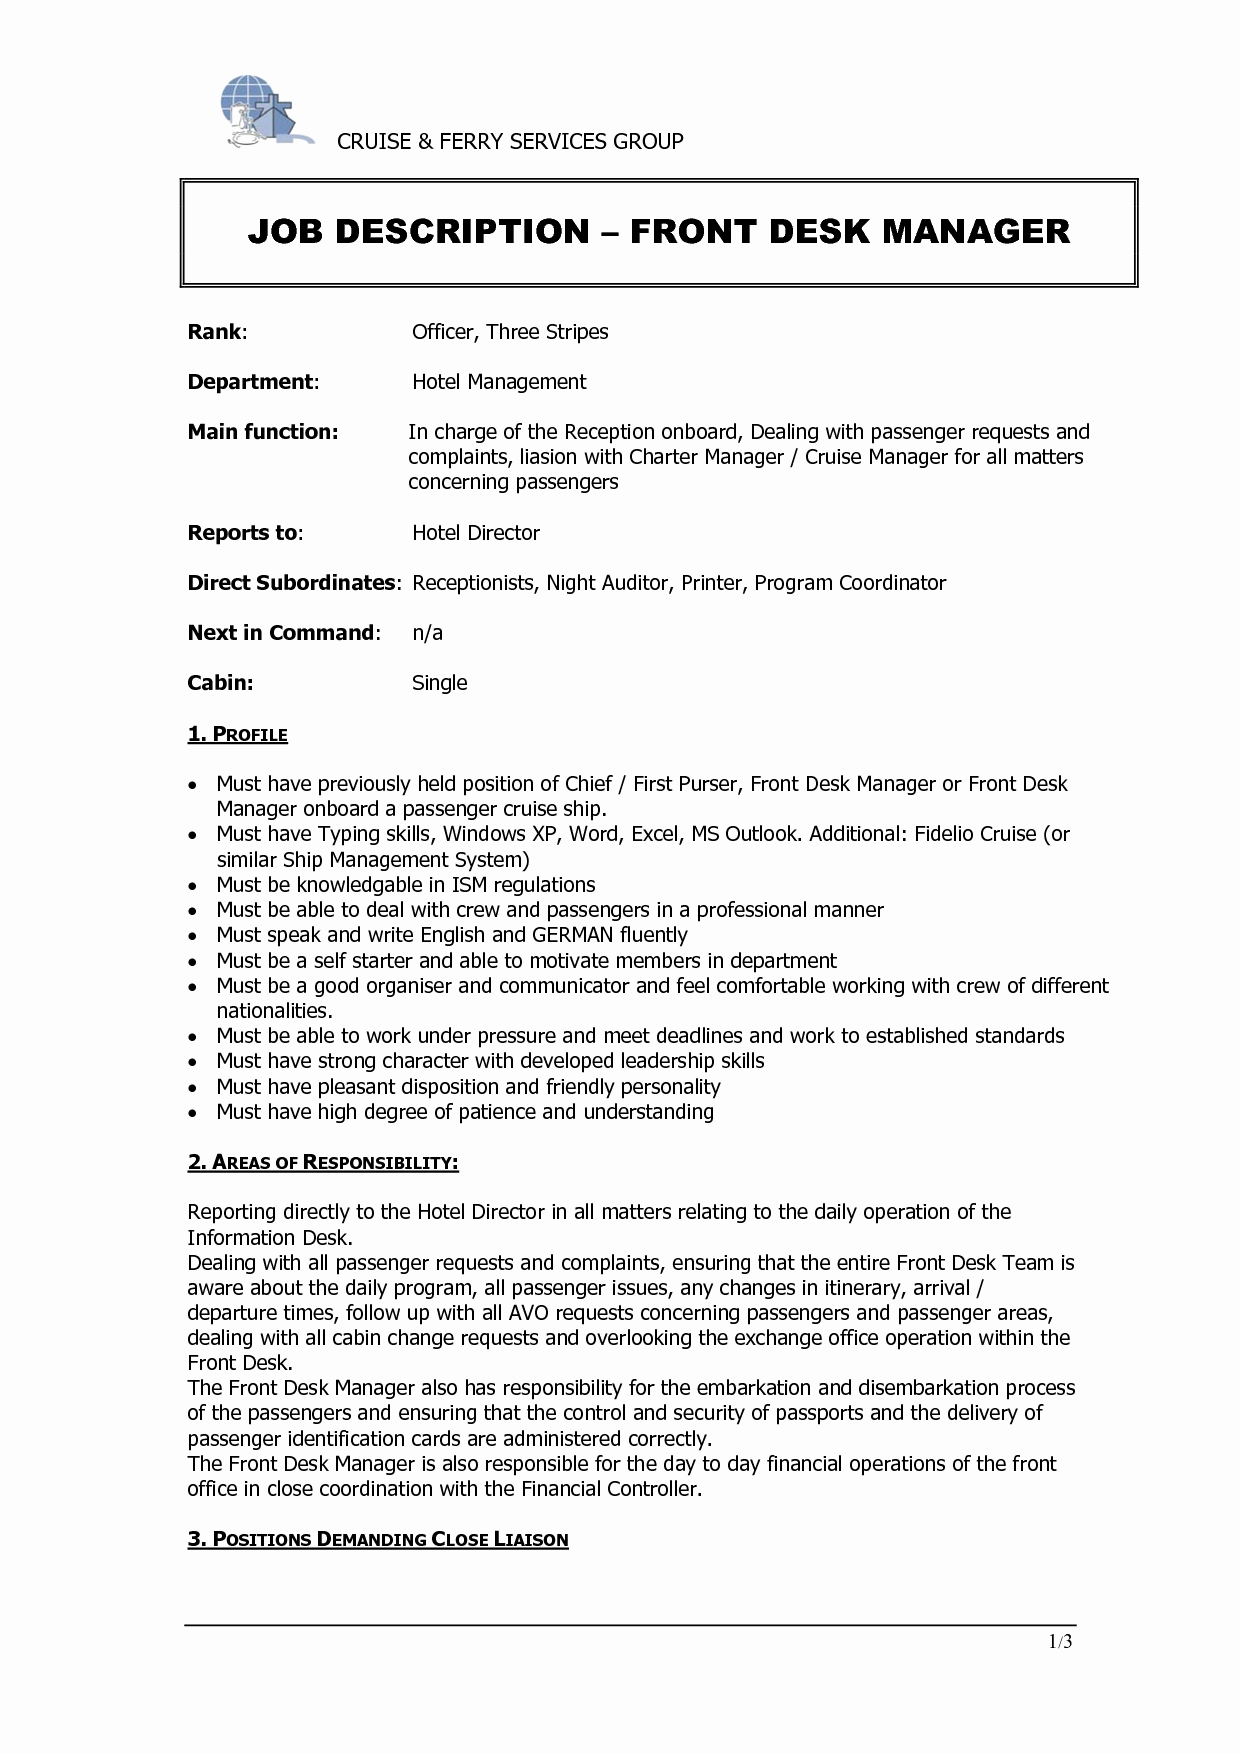 Sample Cover Letter for Entry Level Receptionist Job